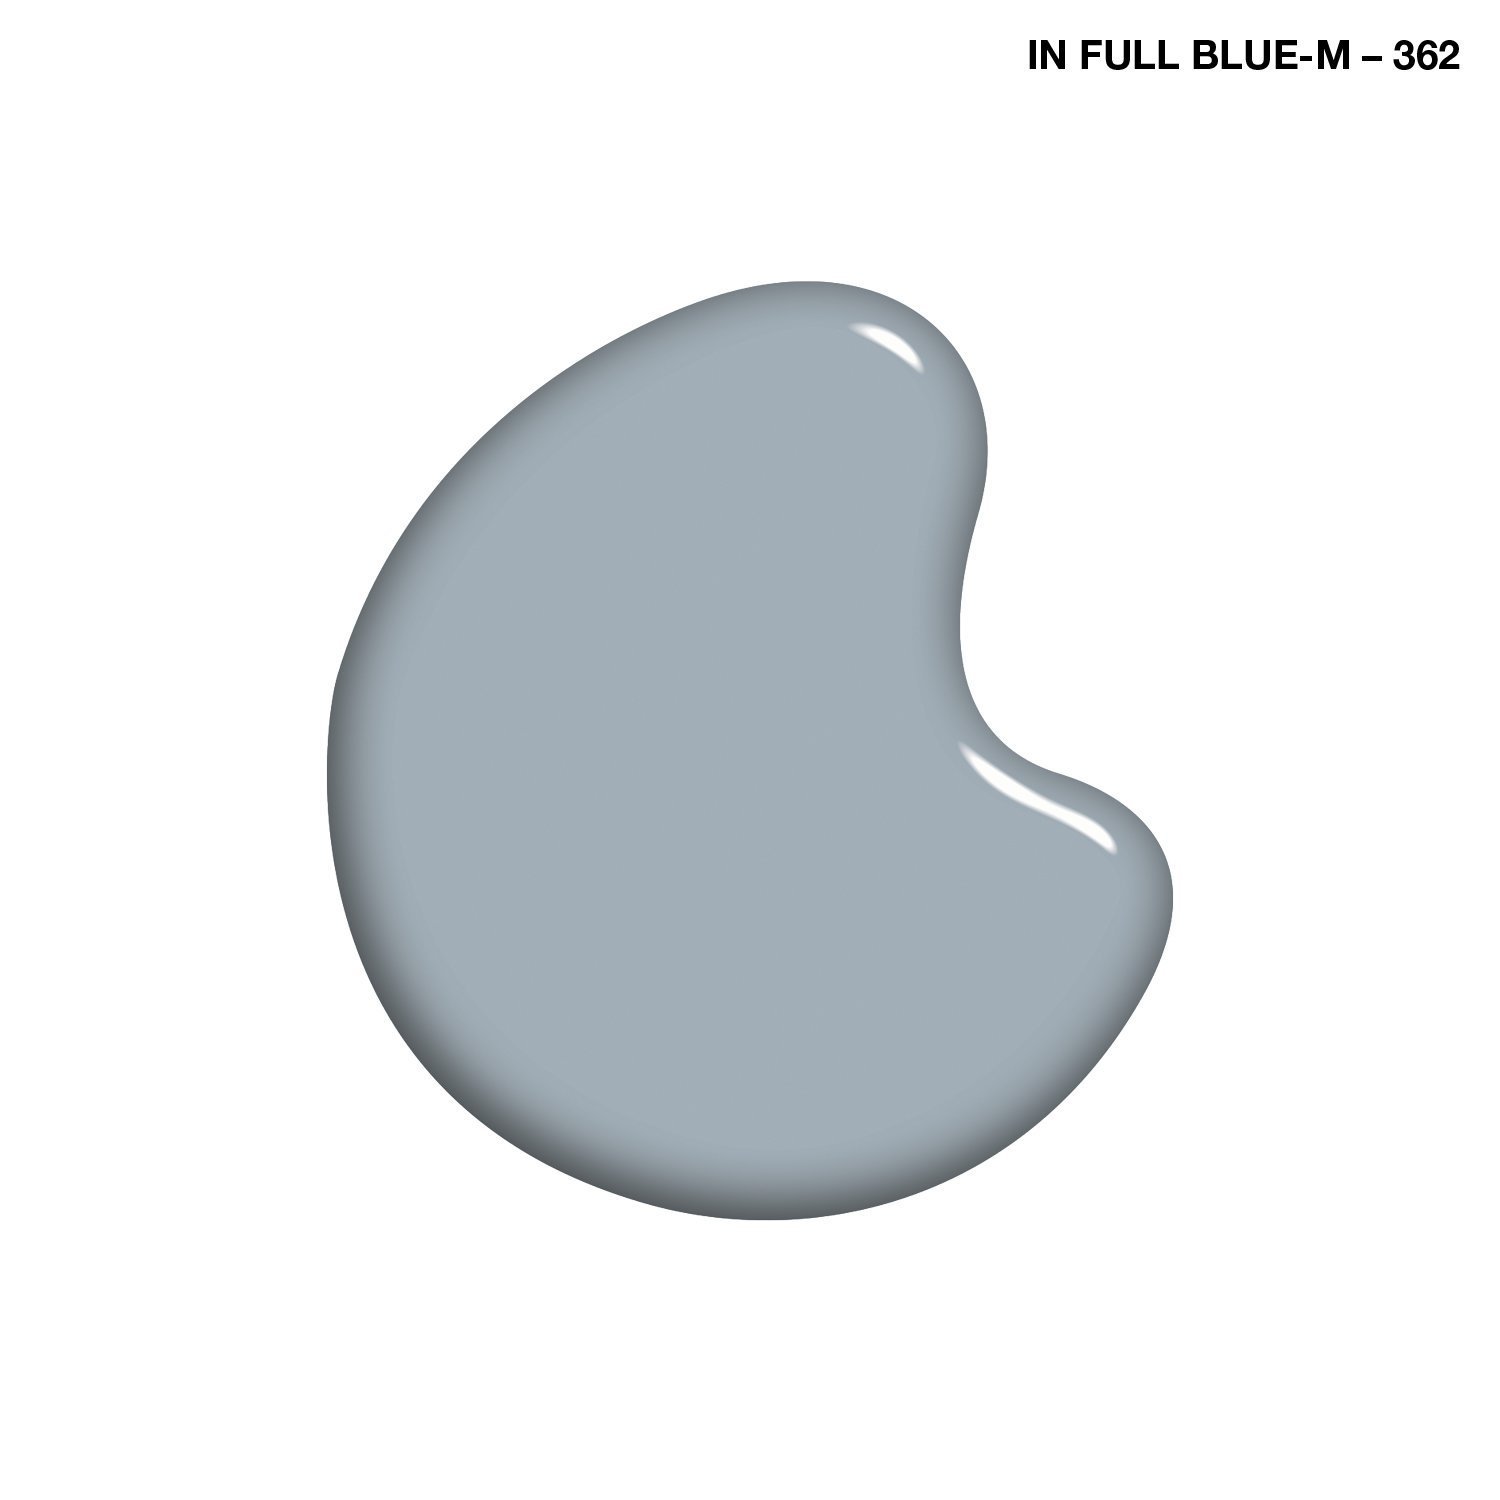 Sally Hansen- Complete Salon Manicure In Full Blue-m 0.5 fl oz - image 4 of 4